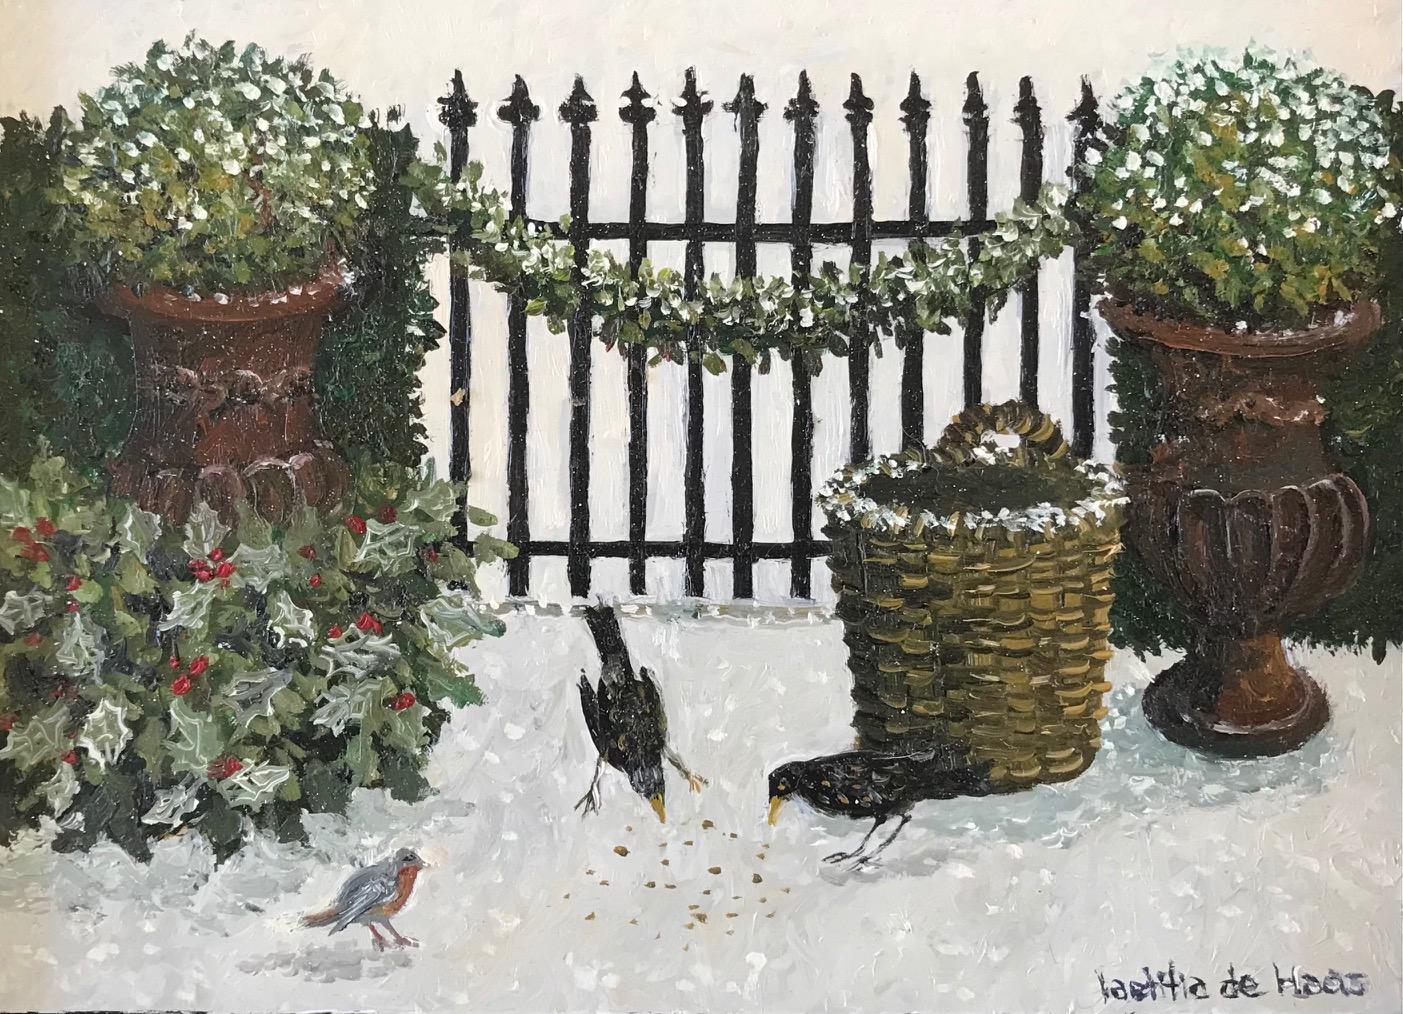 Figurative Painting Laetitia de Haas - « Birds in a Winter Garden » - Peinture néerlandaise cosy d'un jardin dans la neige